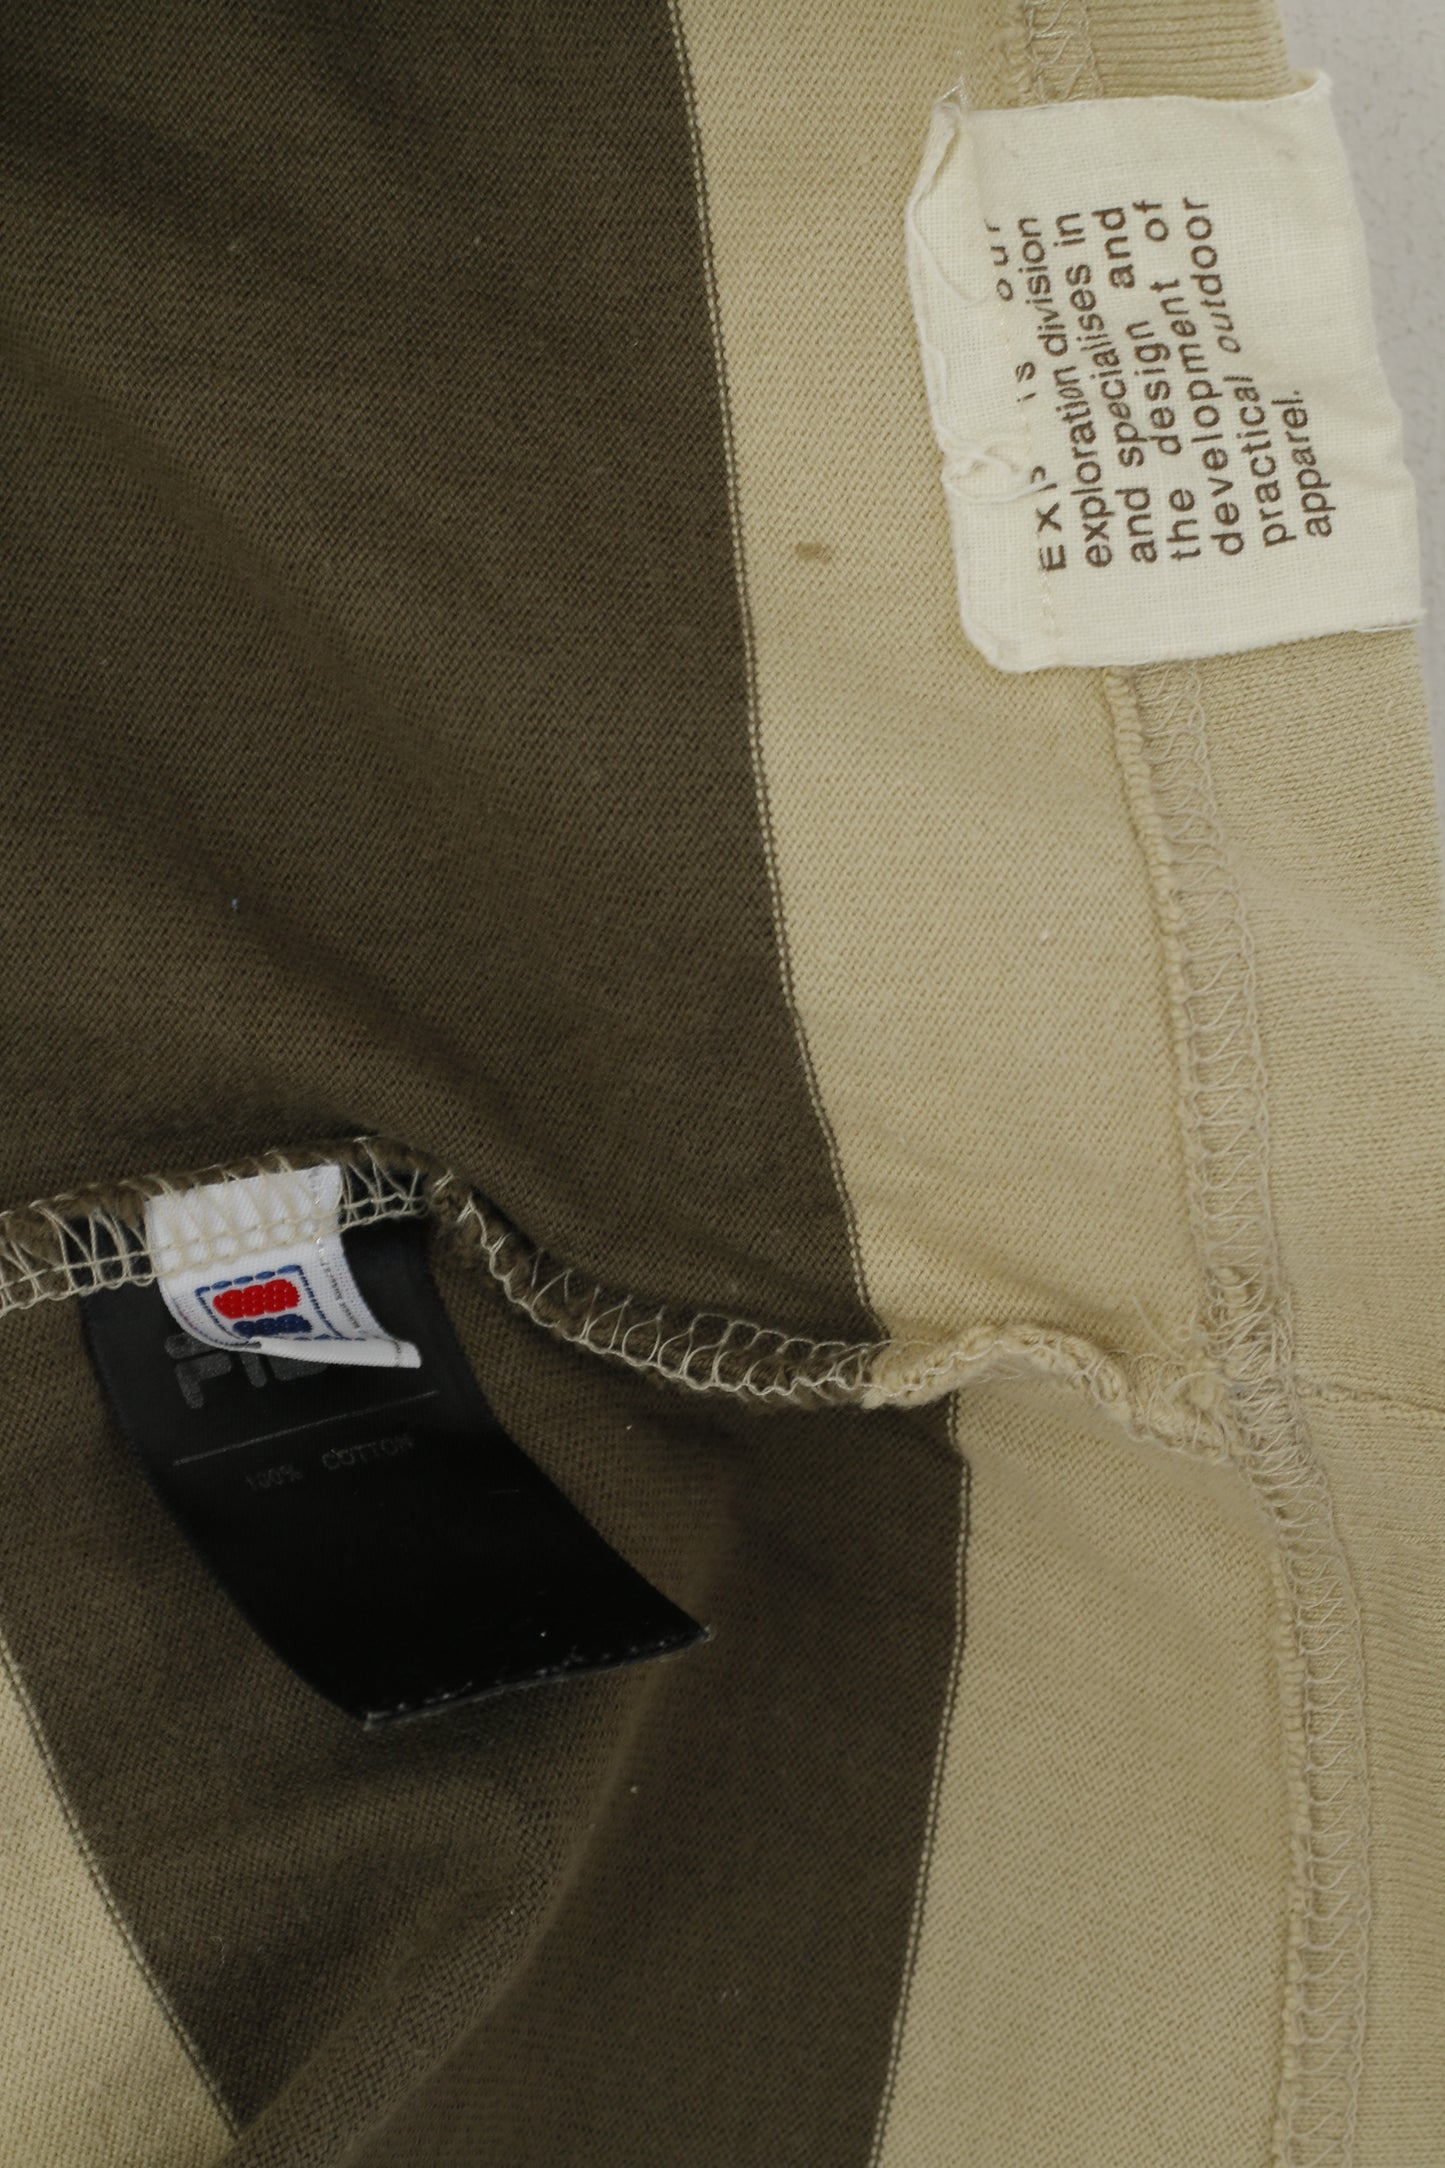 FILA Men L (M) Polo Shirt Green Striped Retroi Cotton Detailed Buttons Long Sleeve Top